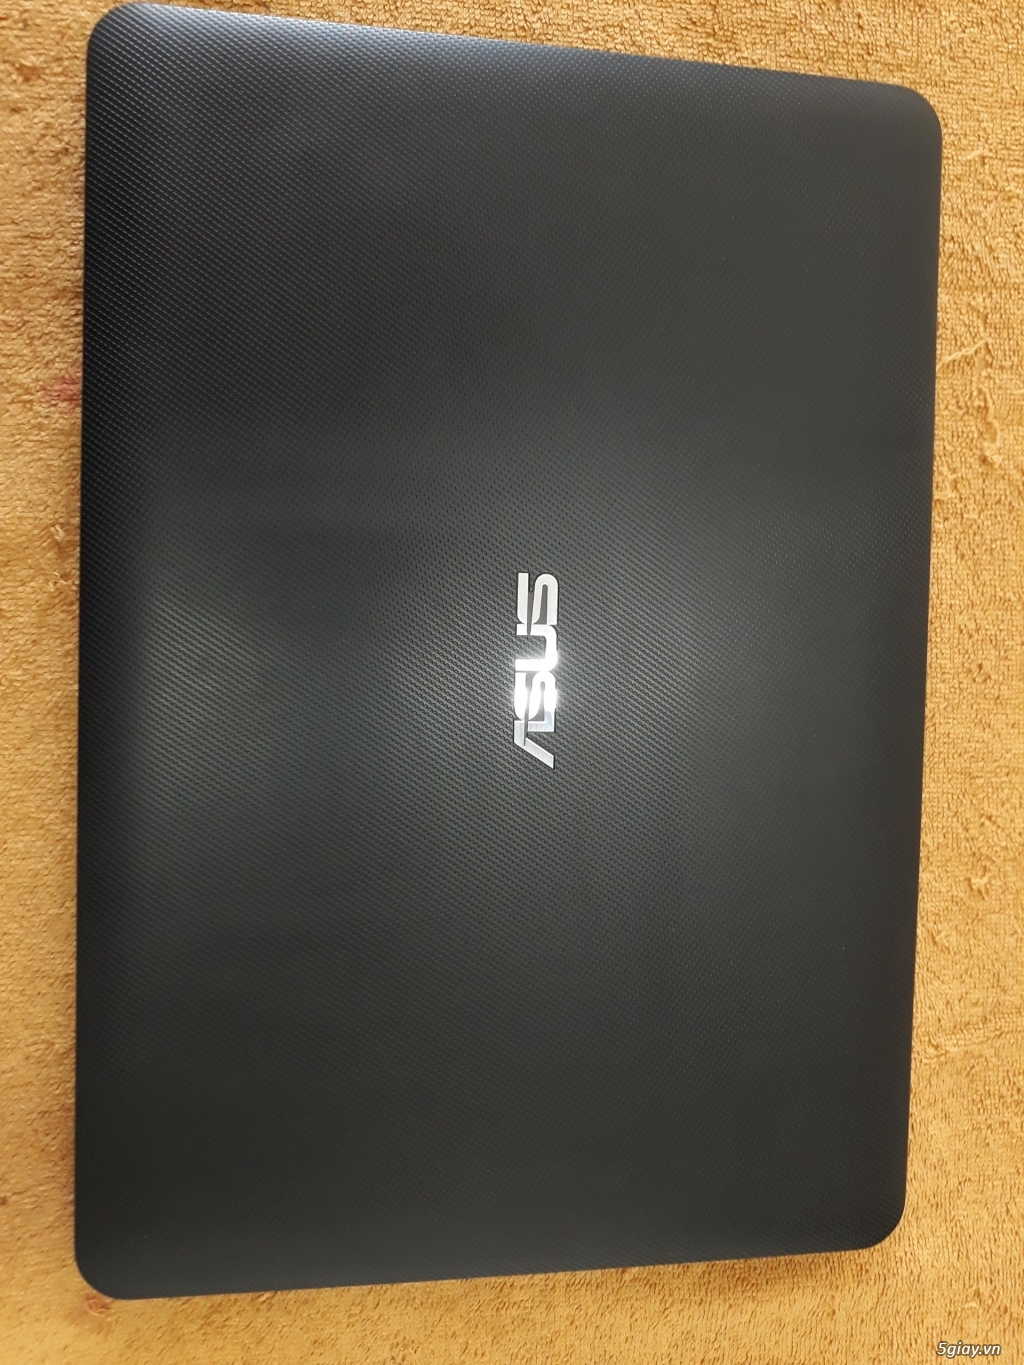 Cần bán Laptop ASUS X454LA i3-5200U/4GB/500GB Zin Tem BH 12 tháng CH - 2